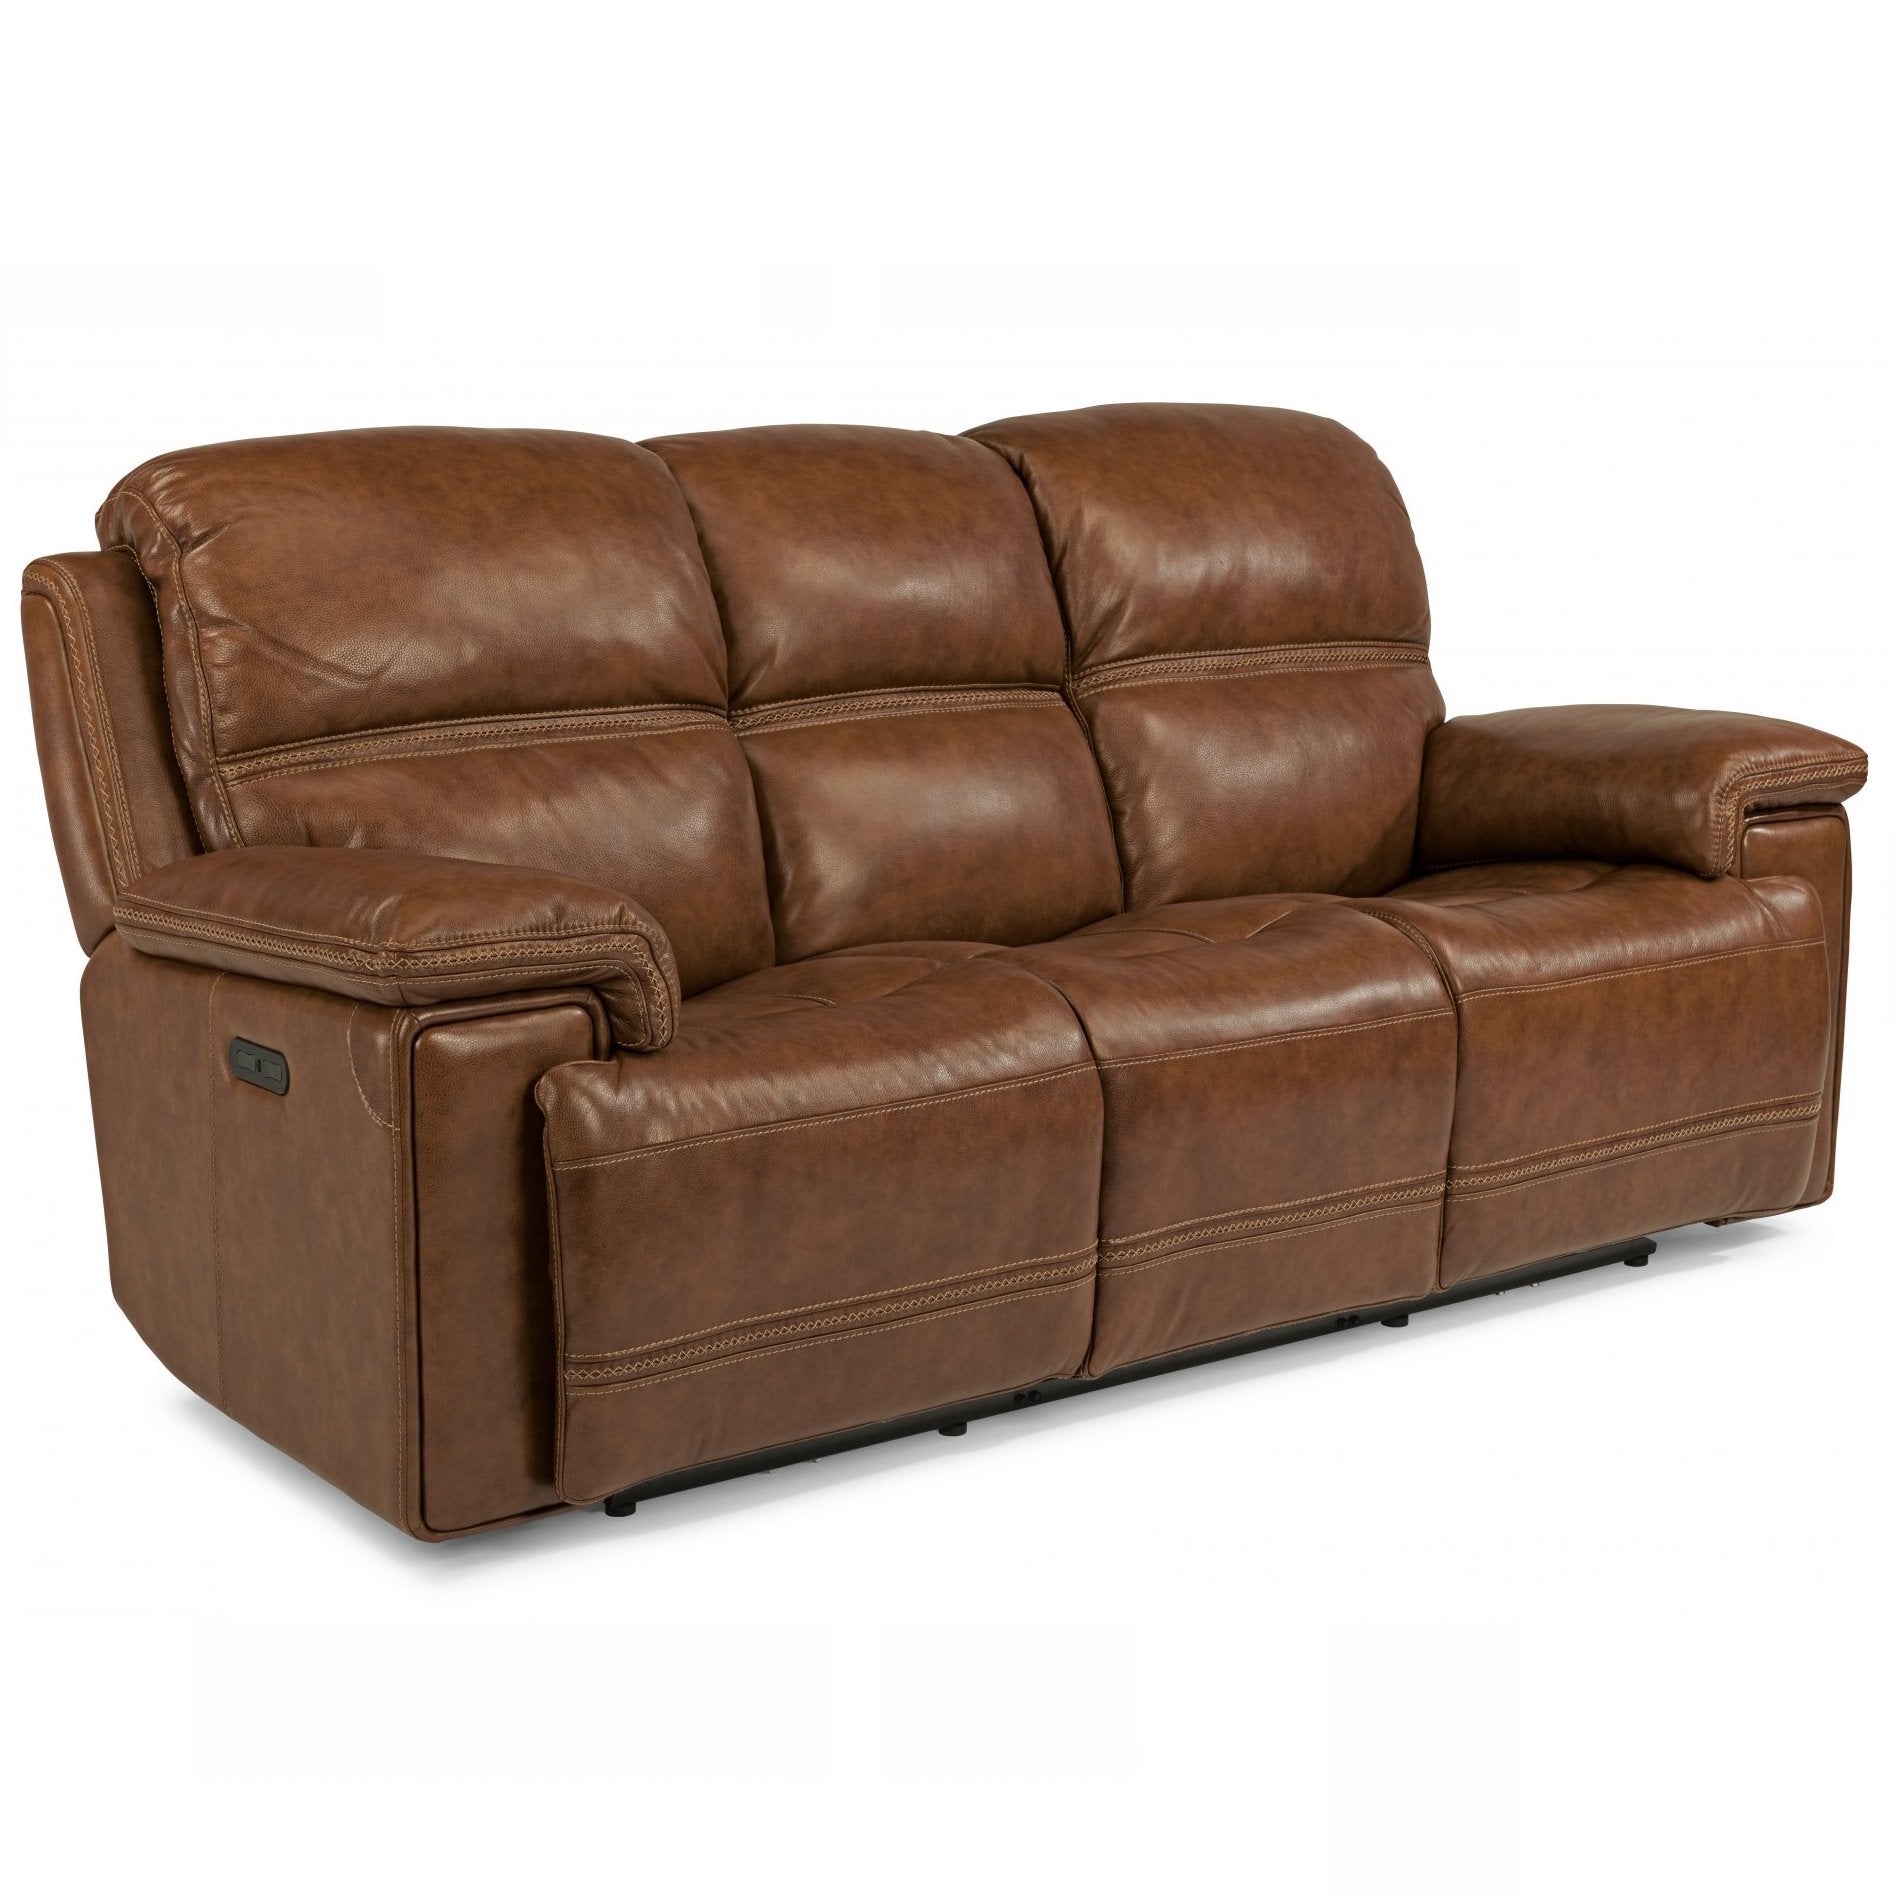 Fenwick Leather Power Reclining Sofa By